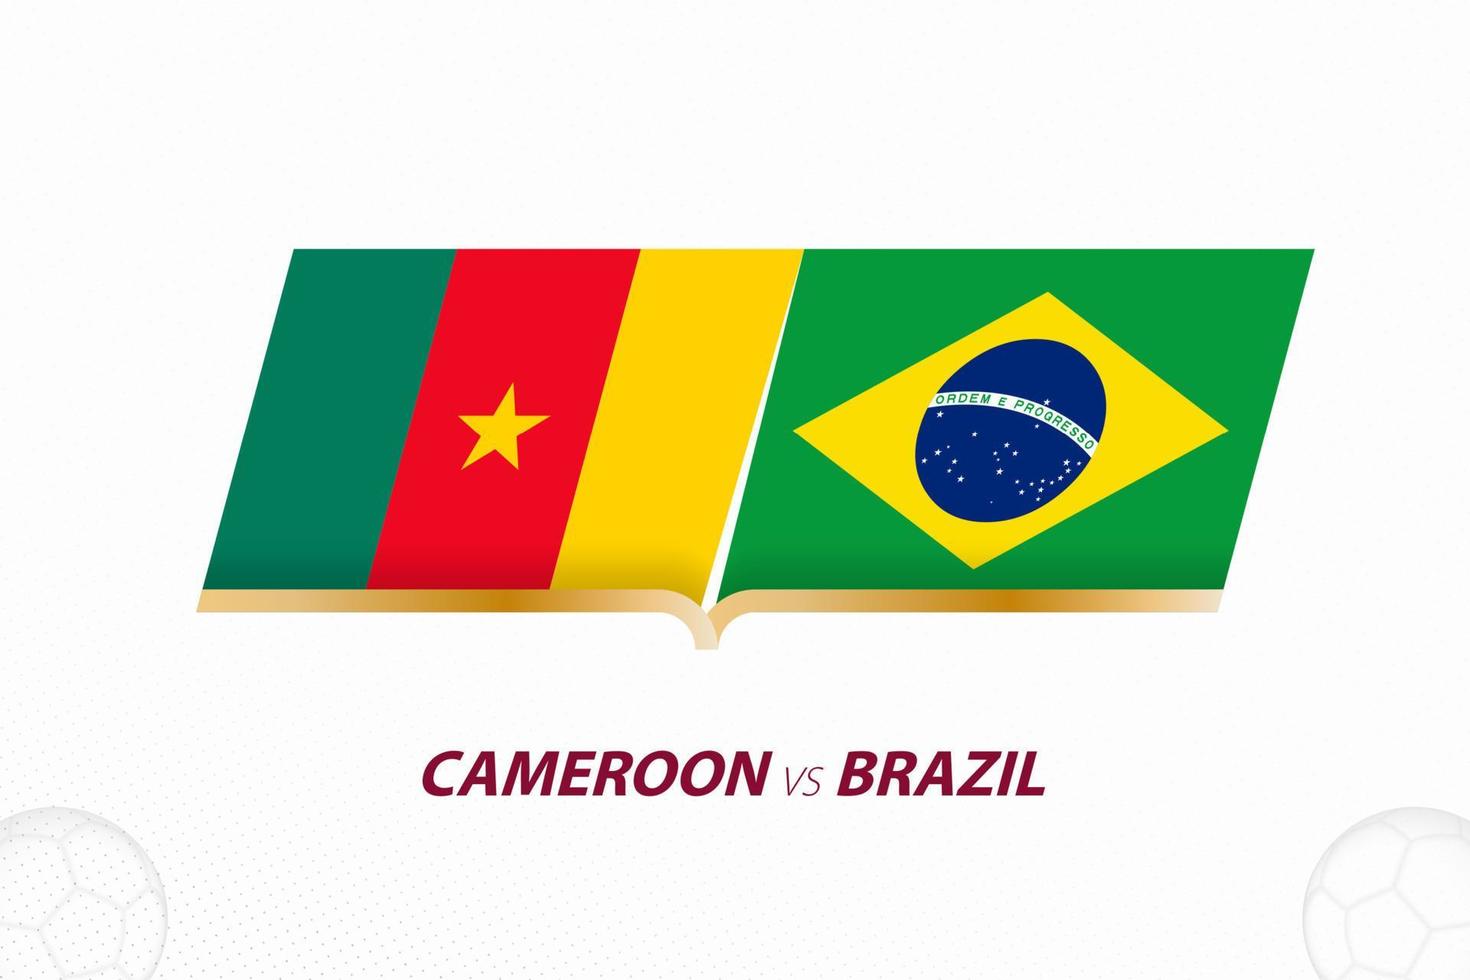 cameroon mot Brasilien i fotboll konkurrens, grupp a. mot ikon på fotboll bakgrund. vektor